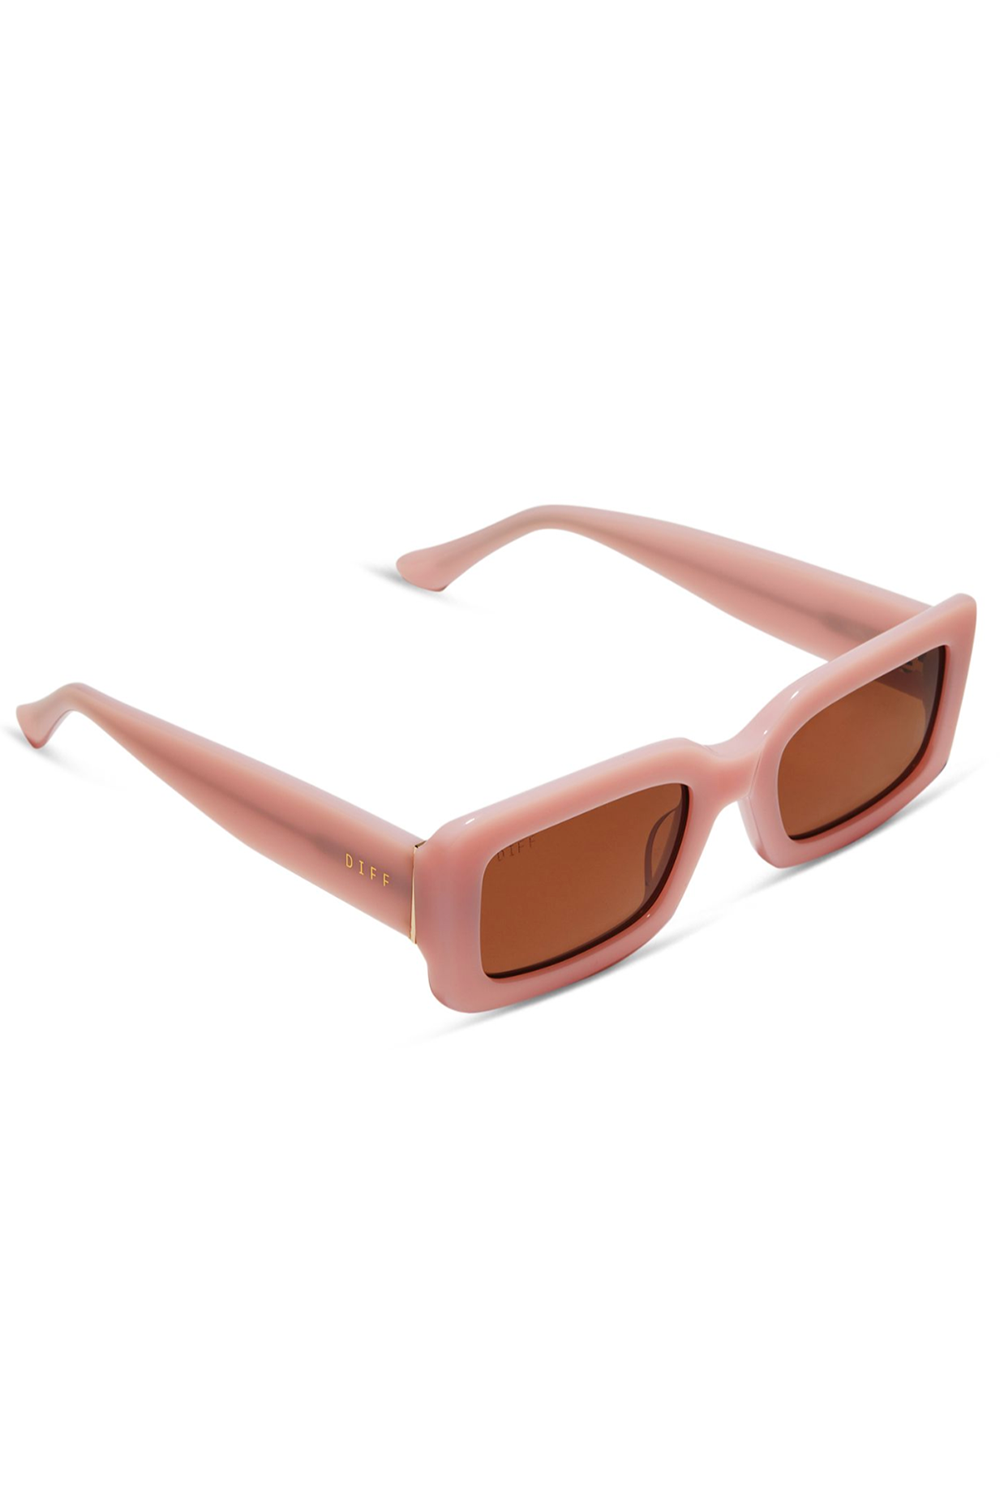 Indy Sunglasses - Pink Velvet Brown